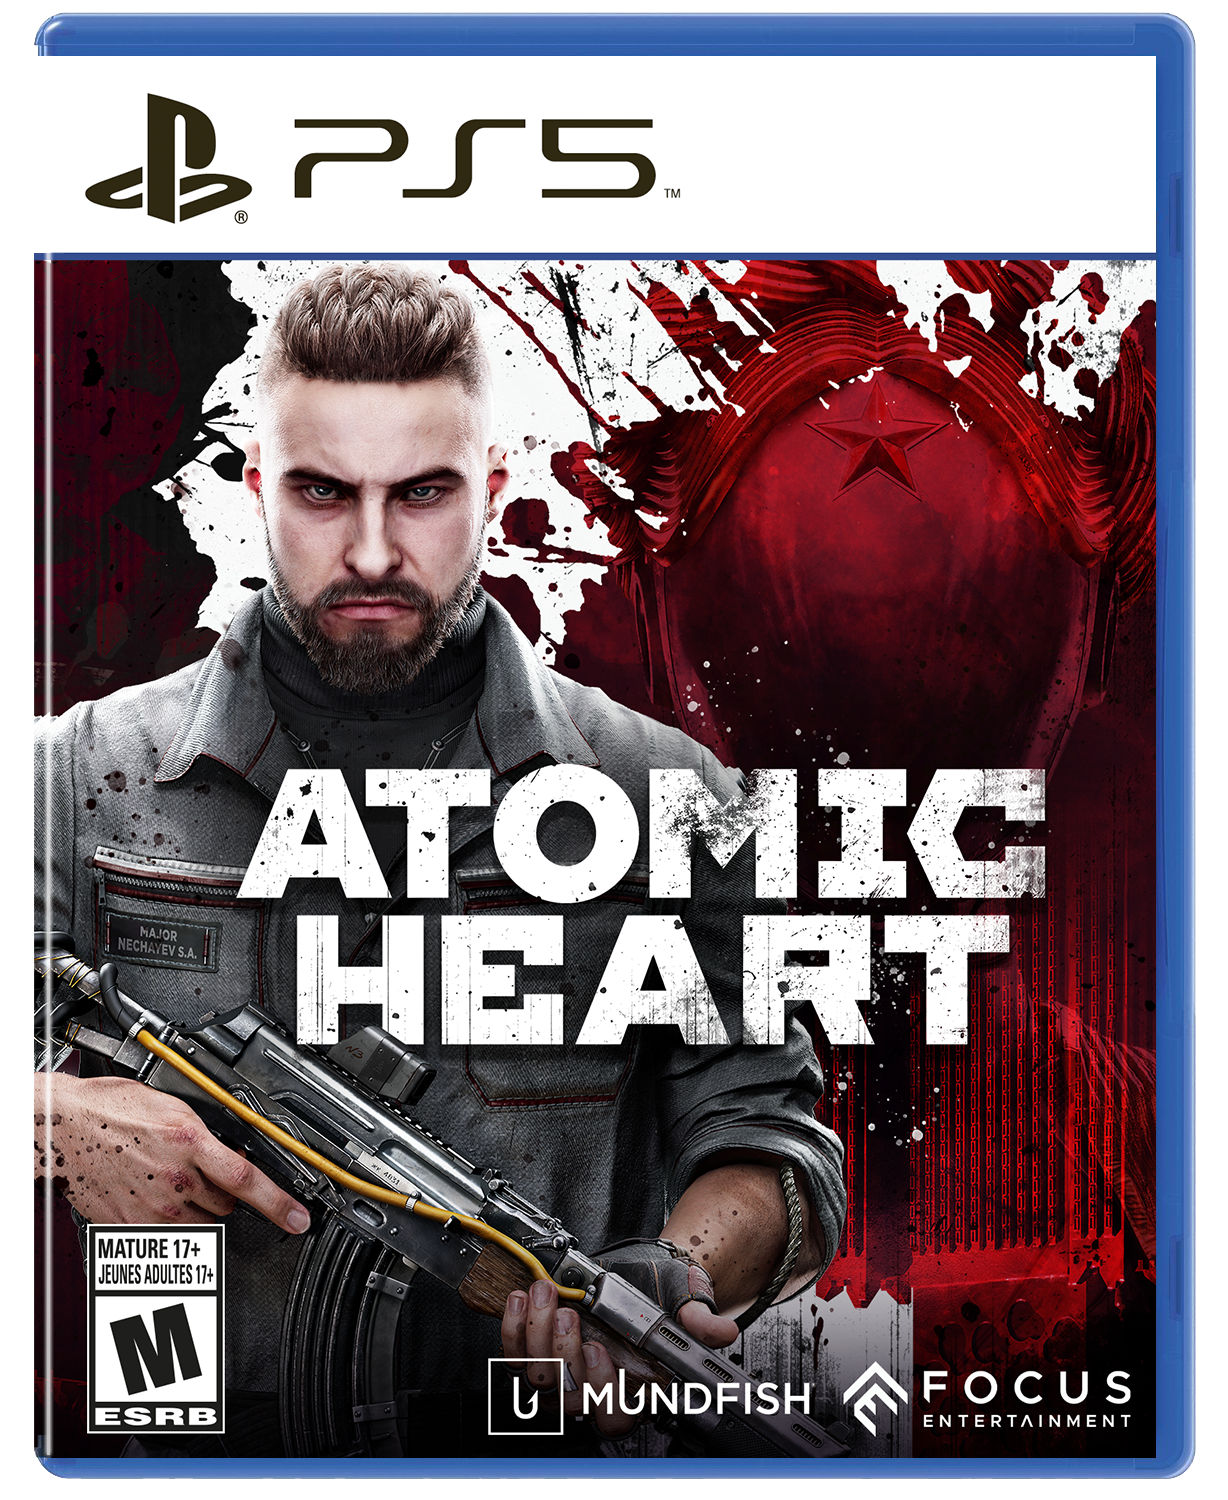 Comprar Atomic Heart (PS4 & PS5) – Jogo completo – Aluguel com desconto -  Loca Play